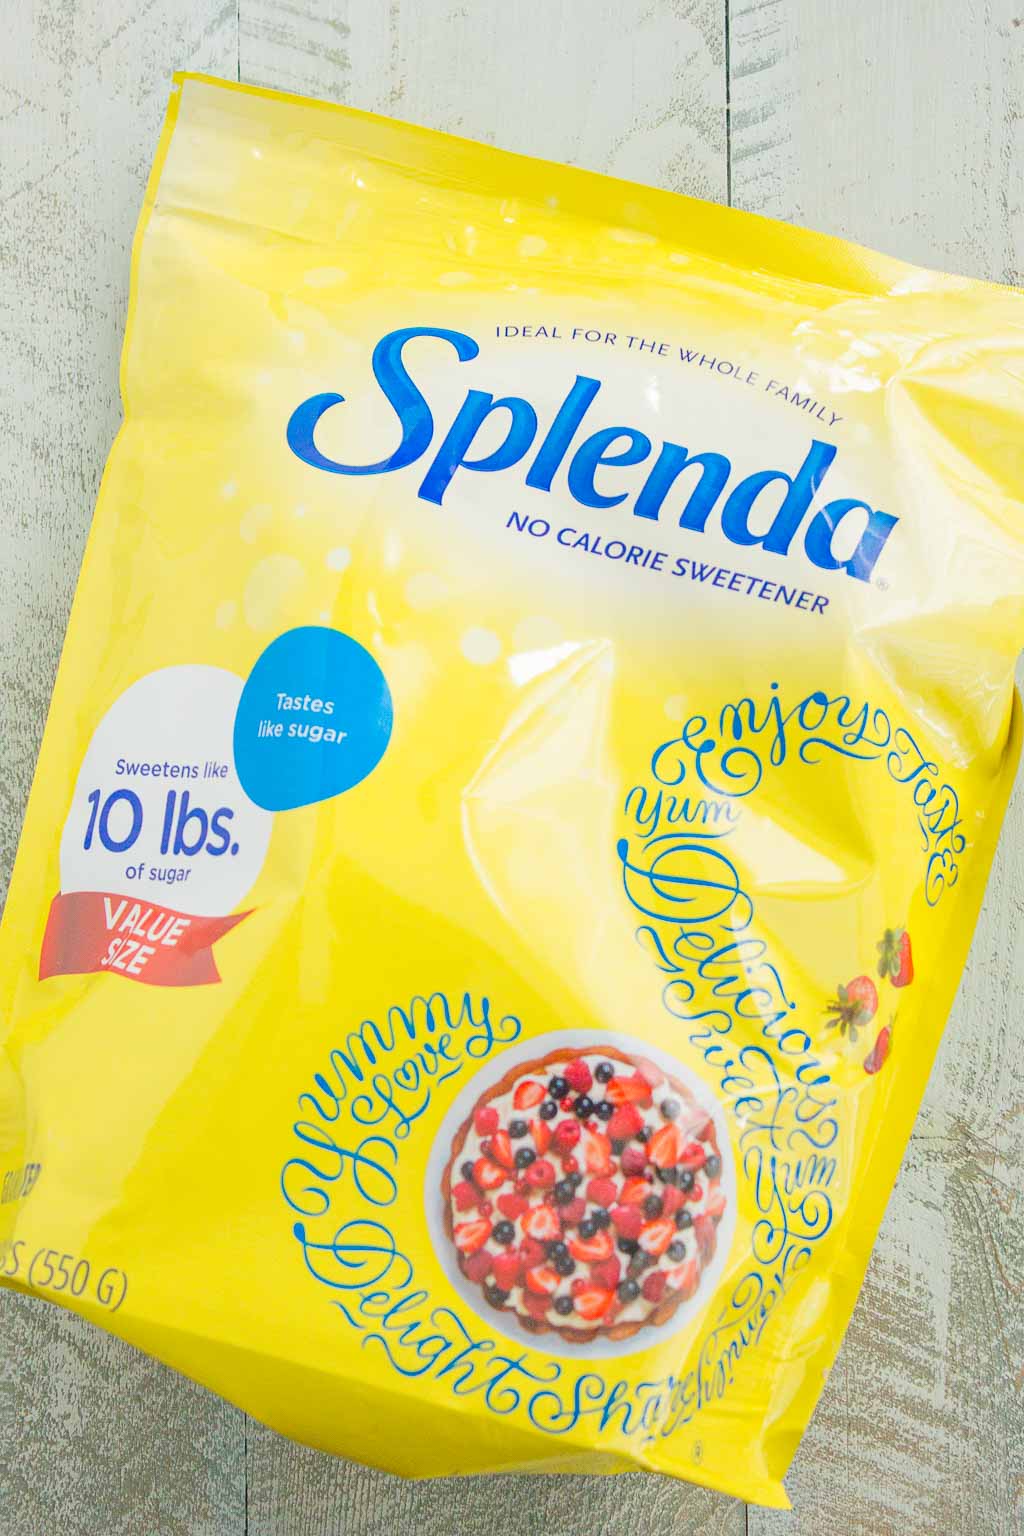 A bag of Splenda on its side 